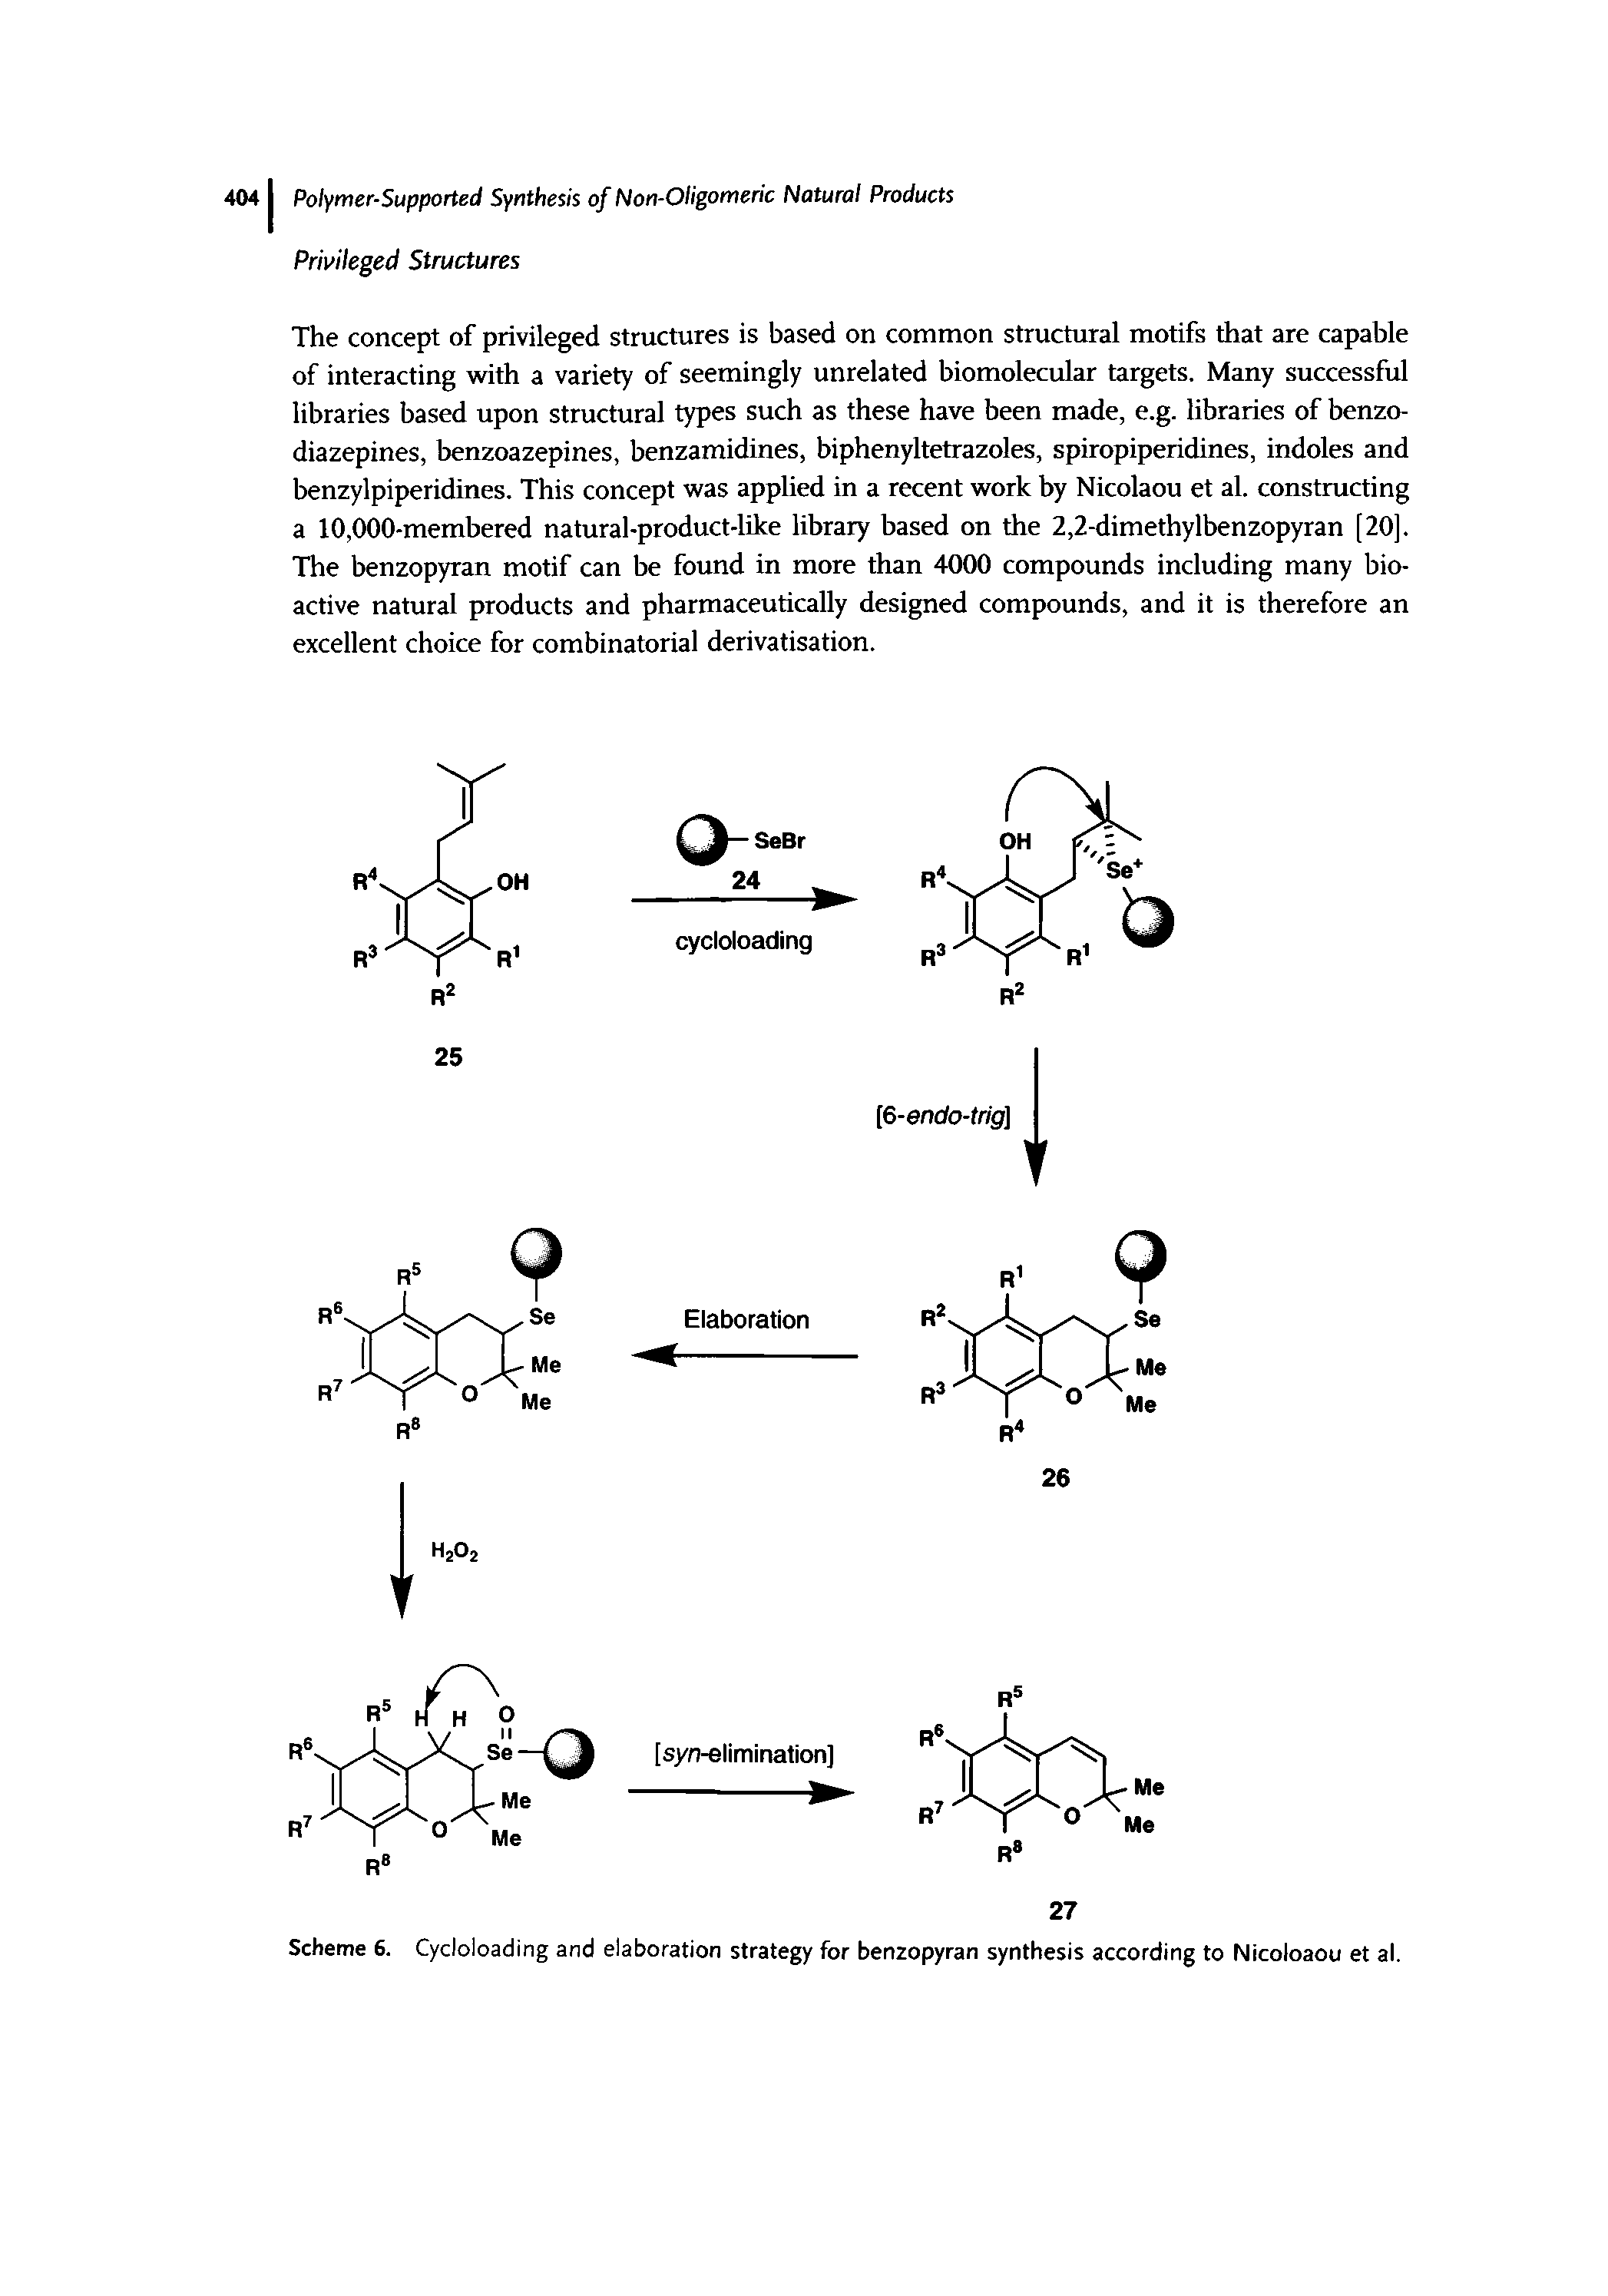 Scheme 6. Cycloloading and elaboration strategy for benzopyran synthesis according to Nicoloaou et al.